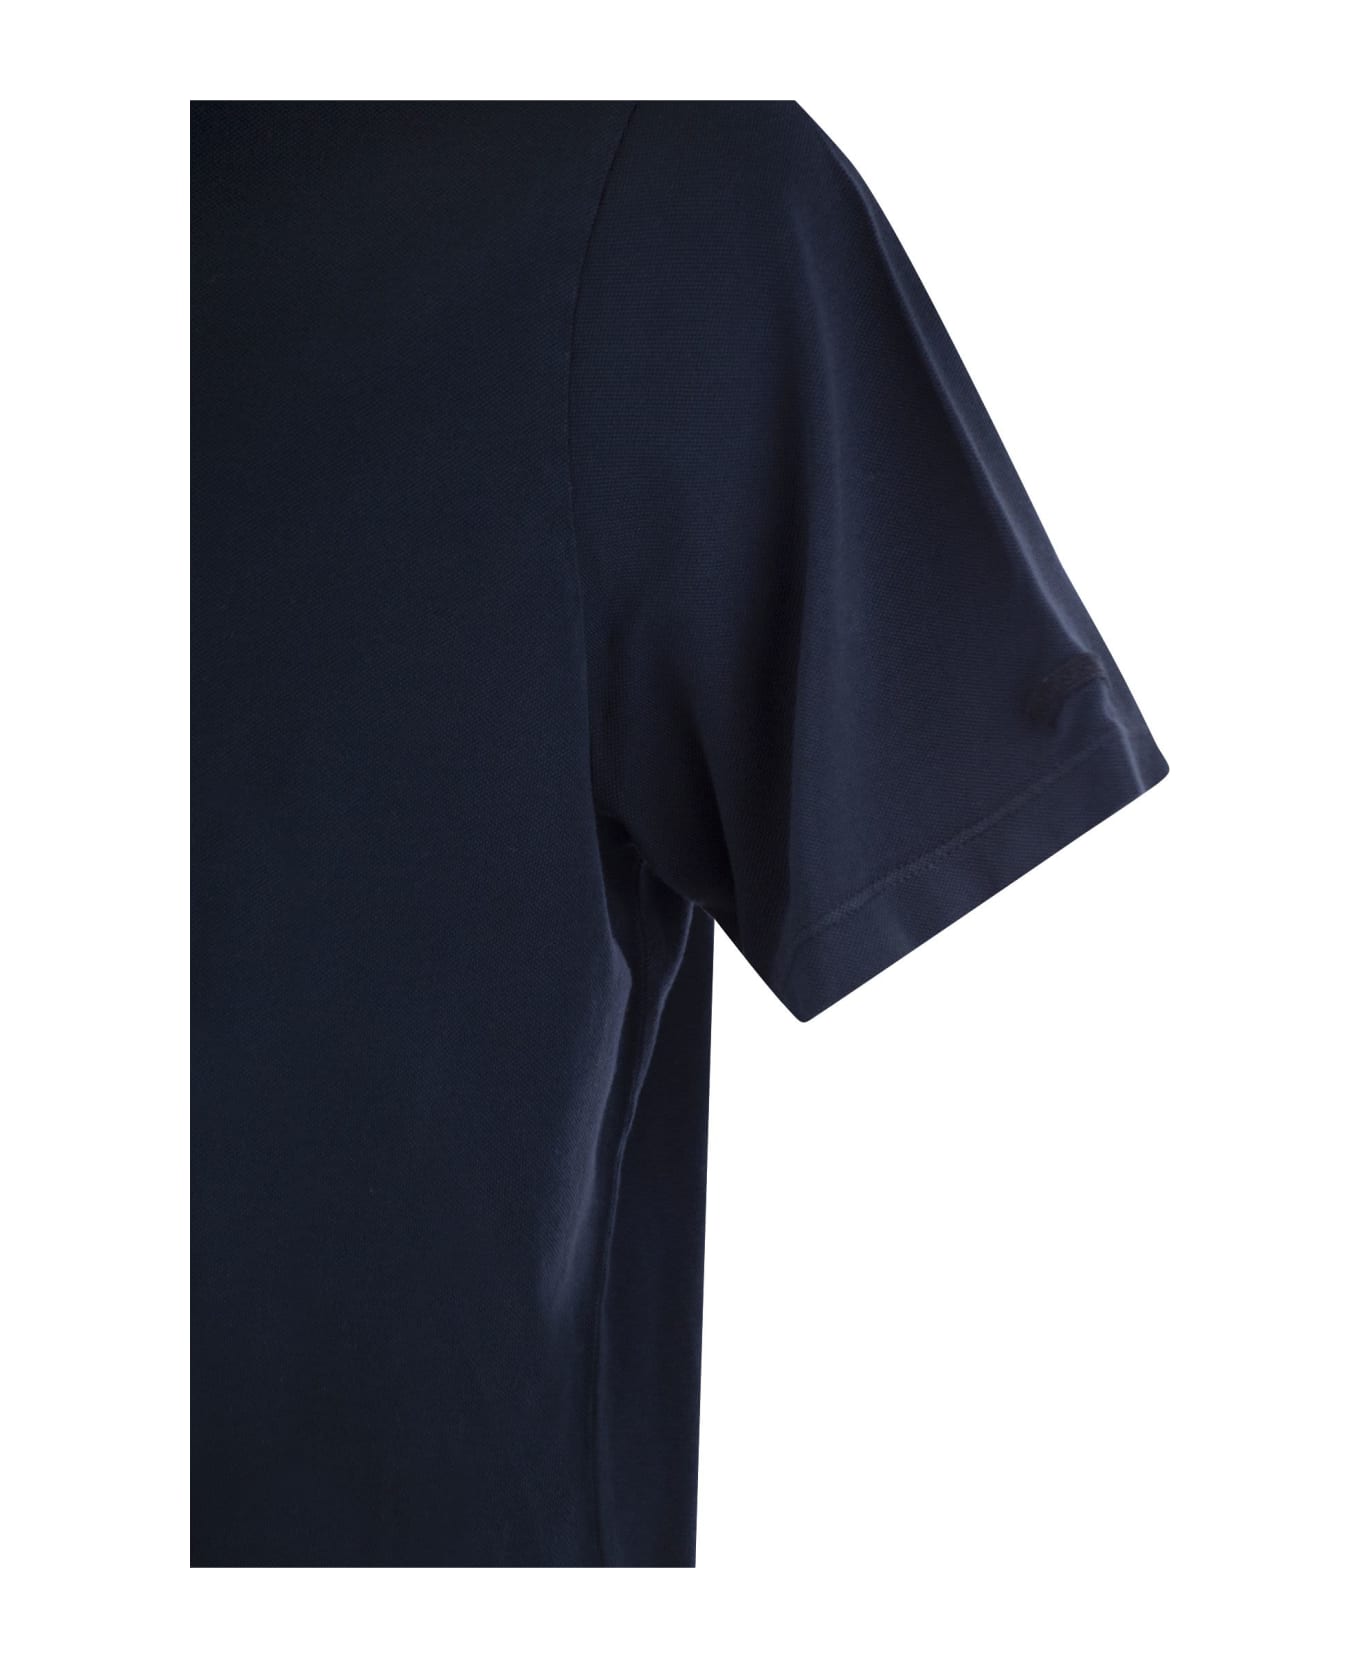 Paul&Shark Garment-dyed Pique Cotton Polo Shirt - C ポロシャツ